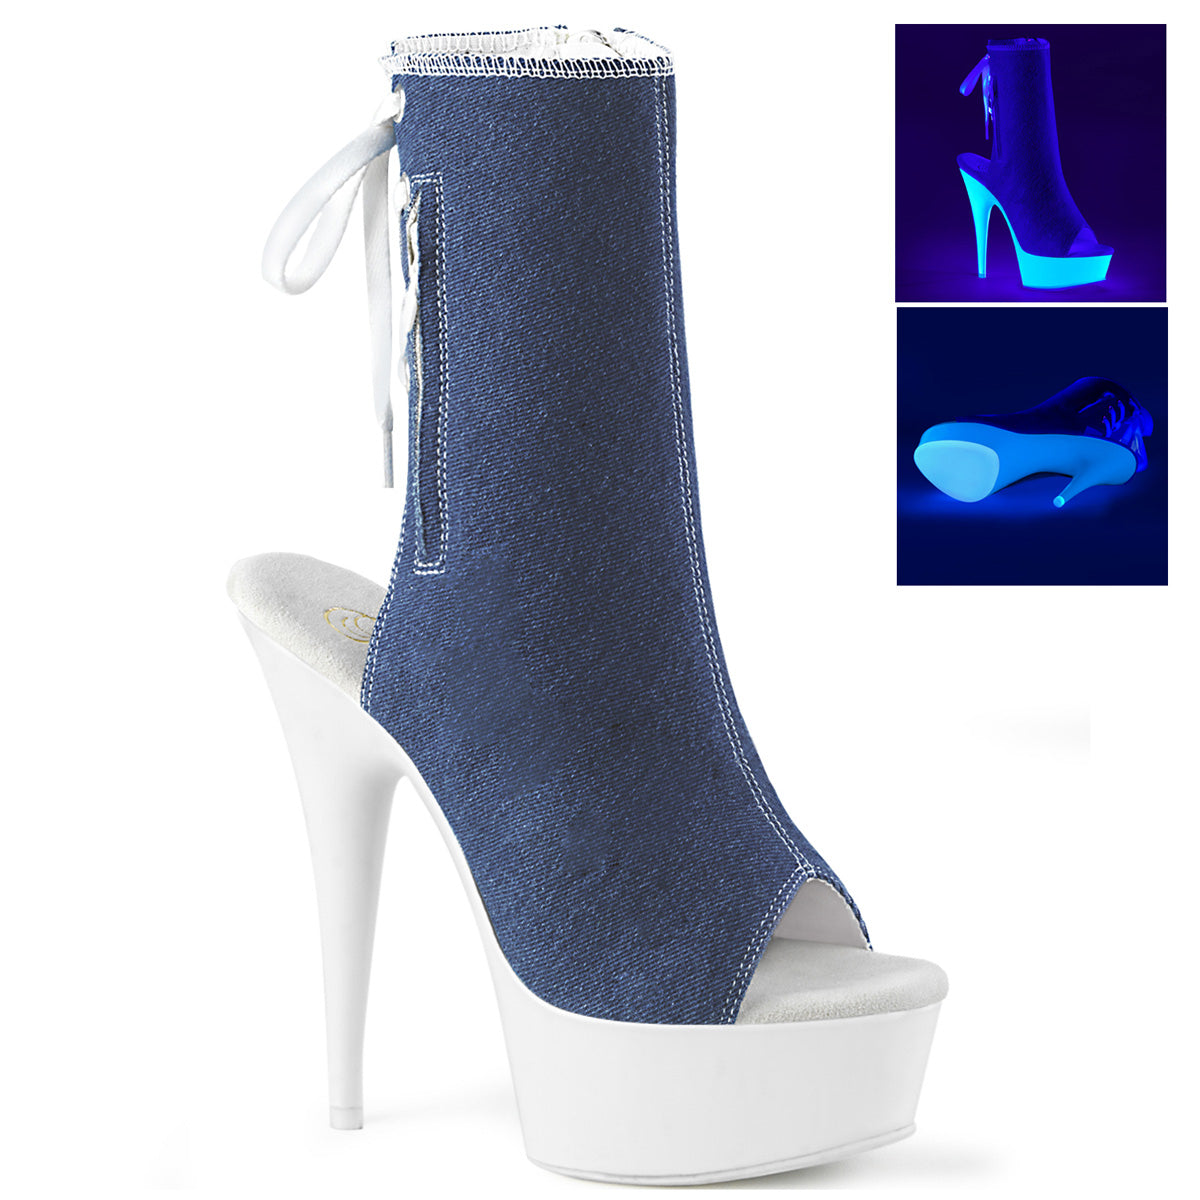 DELIGHT-1018SK Strippers Heels Pleaser Platforms (Exotic Dancing) Denim Blue Canvas/Neon White